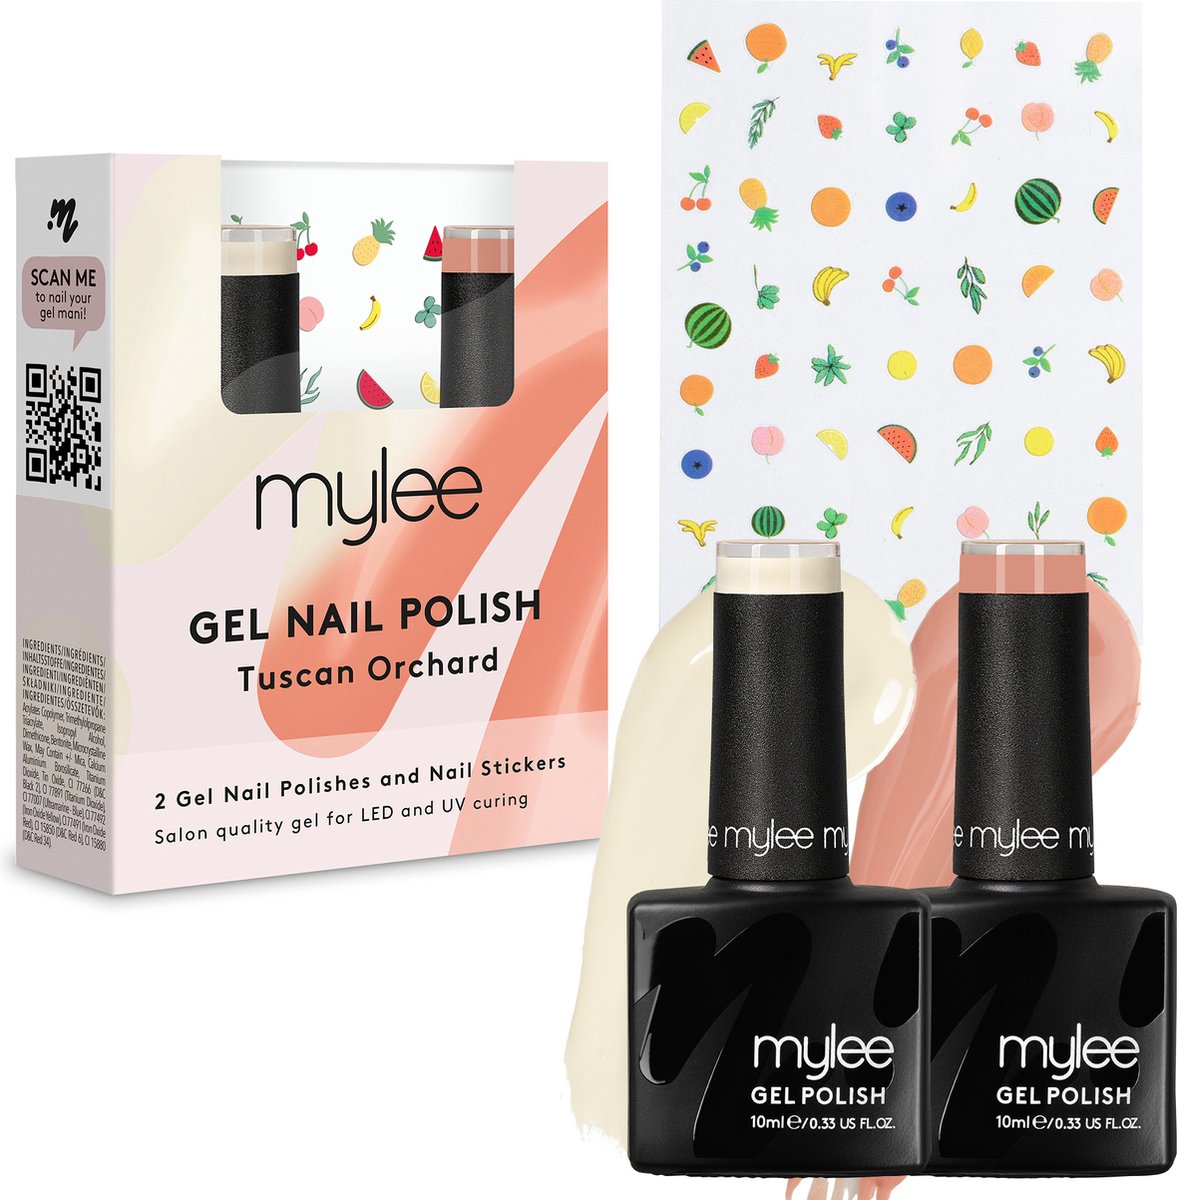 Mylee Gel Nagellak Set met Nail Art Stickers 2x10ml [Tuscan Orchard] UV/LED Gellak Nail Art Manicure Pedicure, Professioneel & Thuisgebruik - Langdurig en gemakkelijk aan te brengen